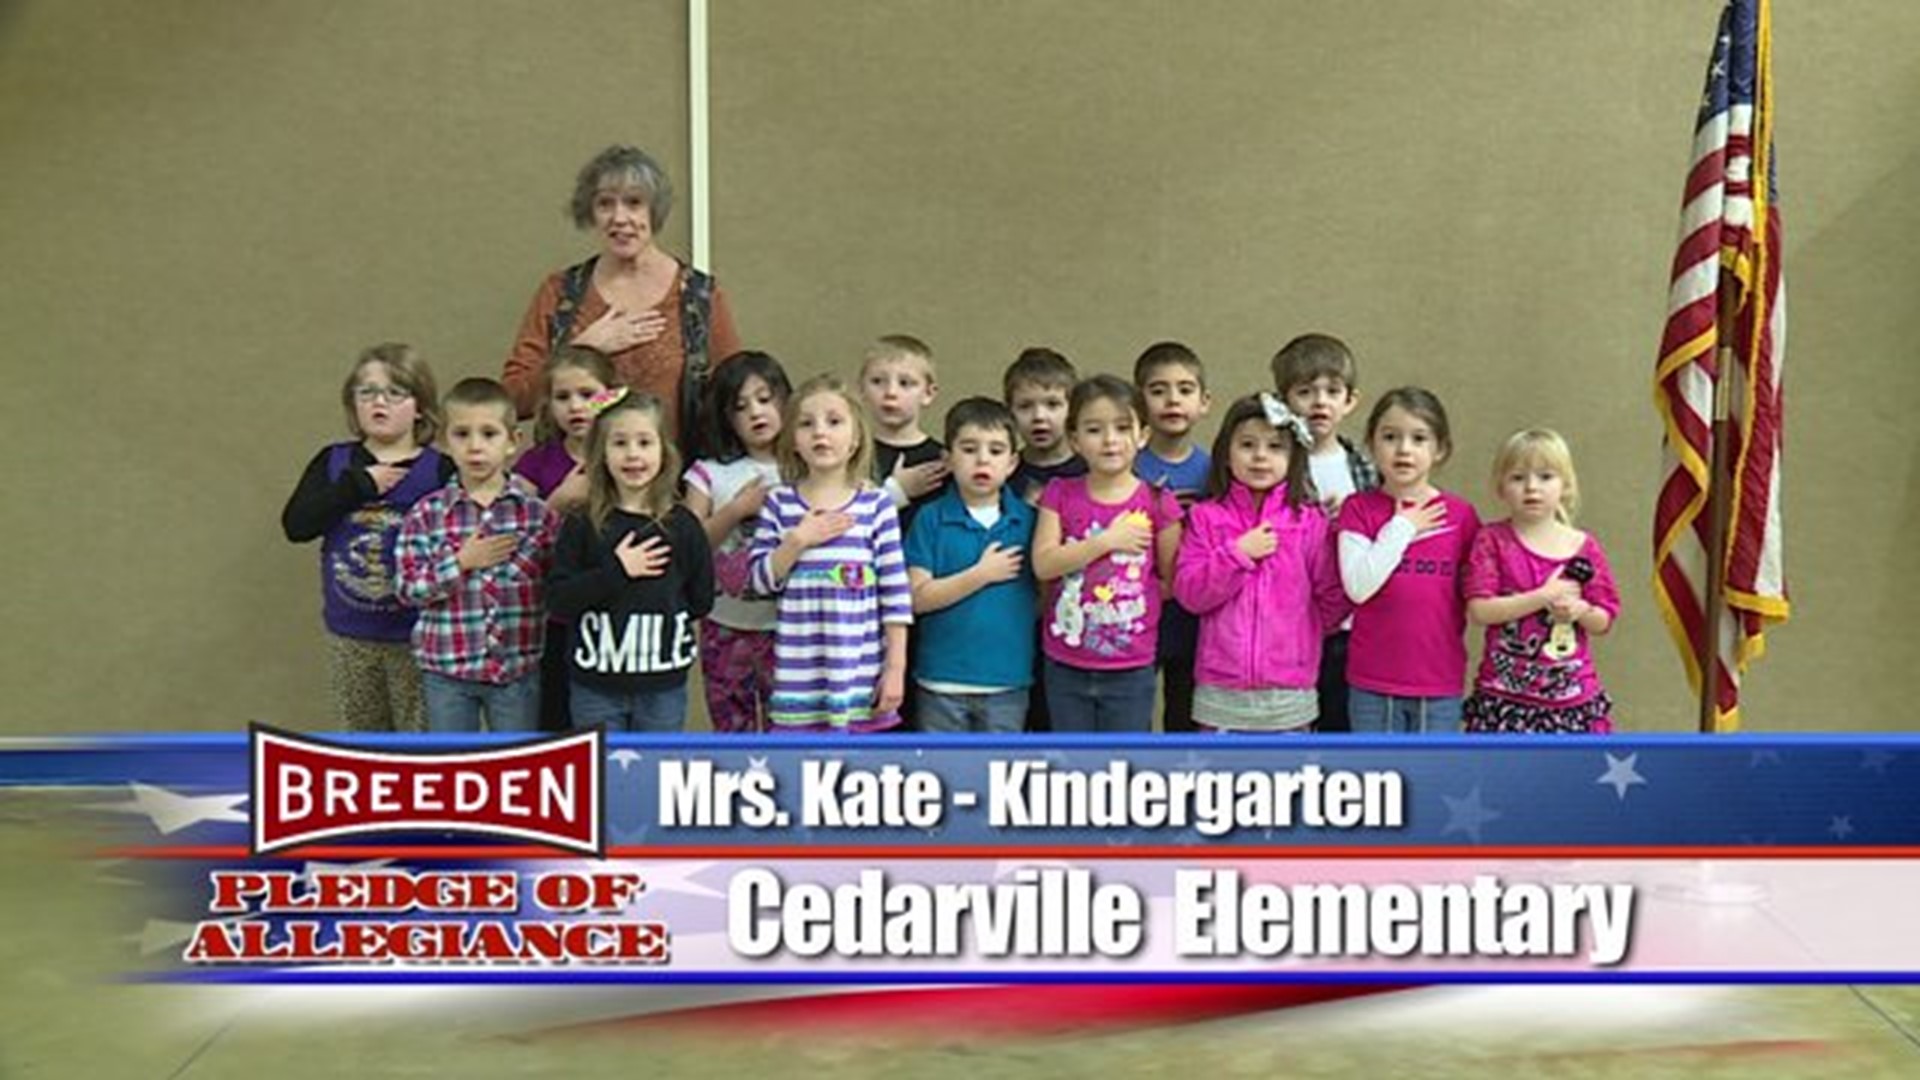 Cedarville Elementary, Mrs. Kate - Kindergarten